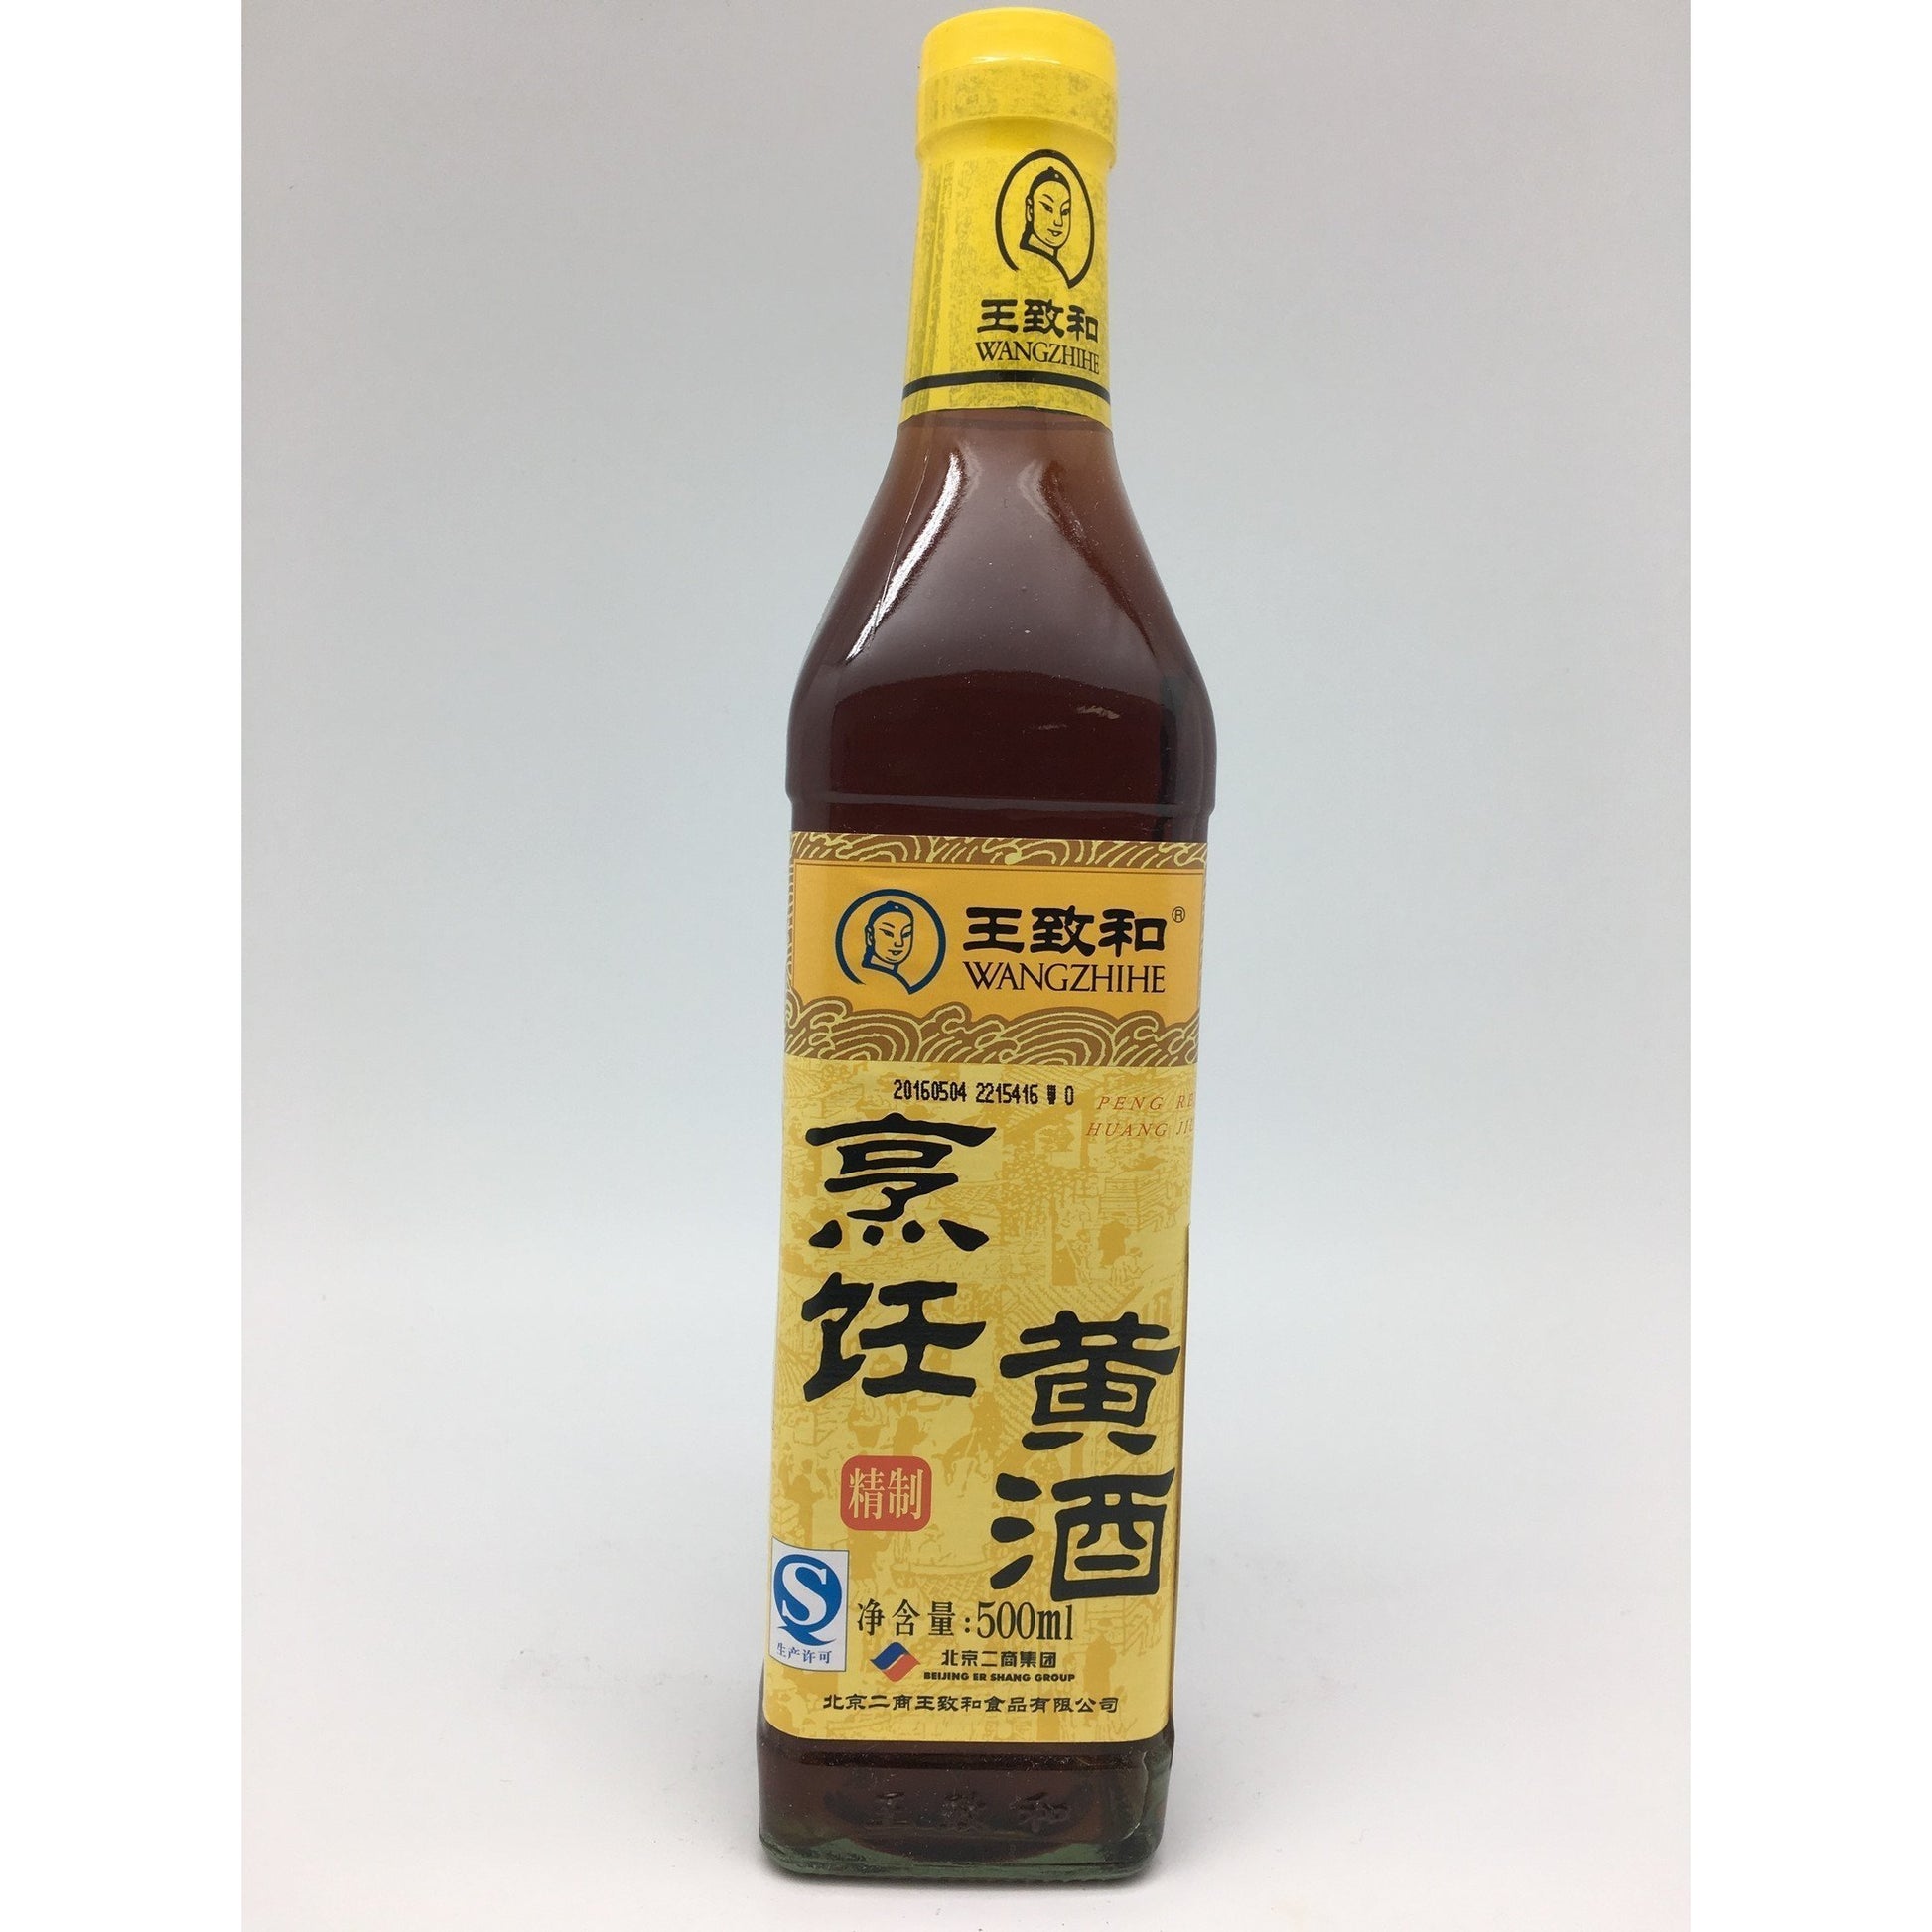 S096C Wang Zhi He Brand - Cooking Wine 500ml - 15 bot / 1CTN - New Eastland Pty Ltd - Asian food wholesalers